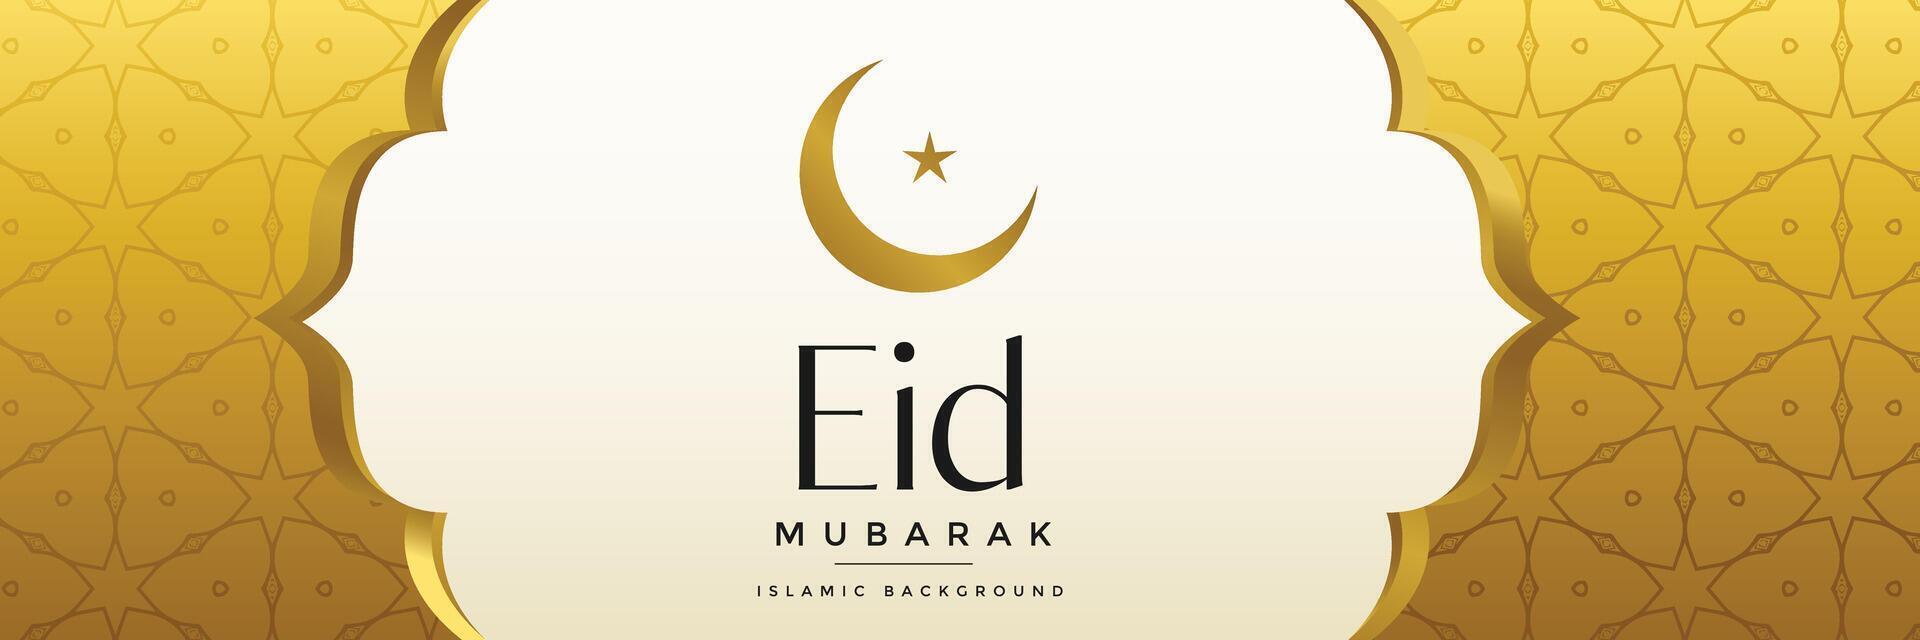 premie islamic eid mubarak festival baner vektor